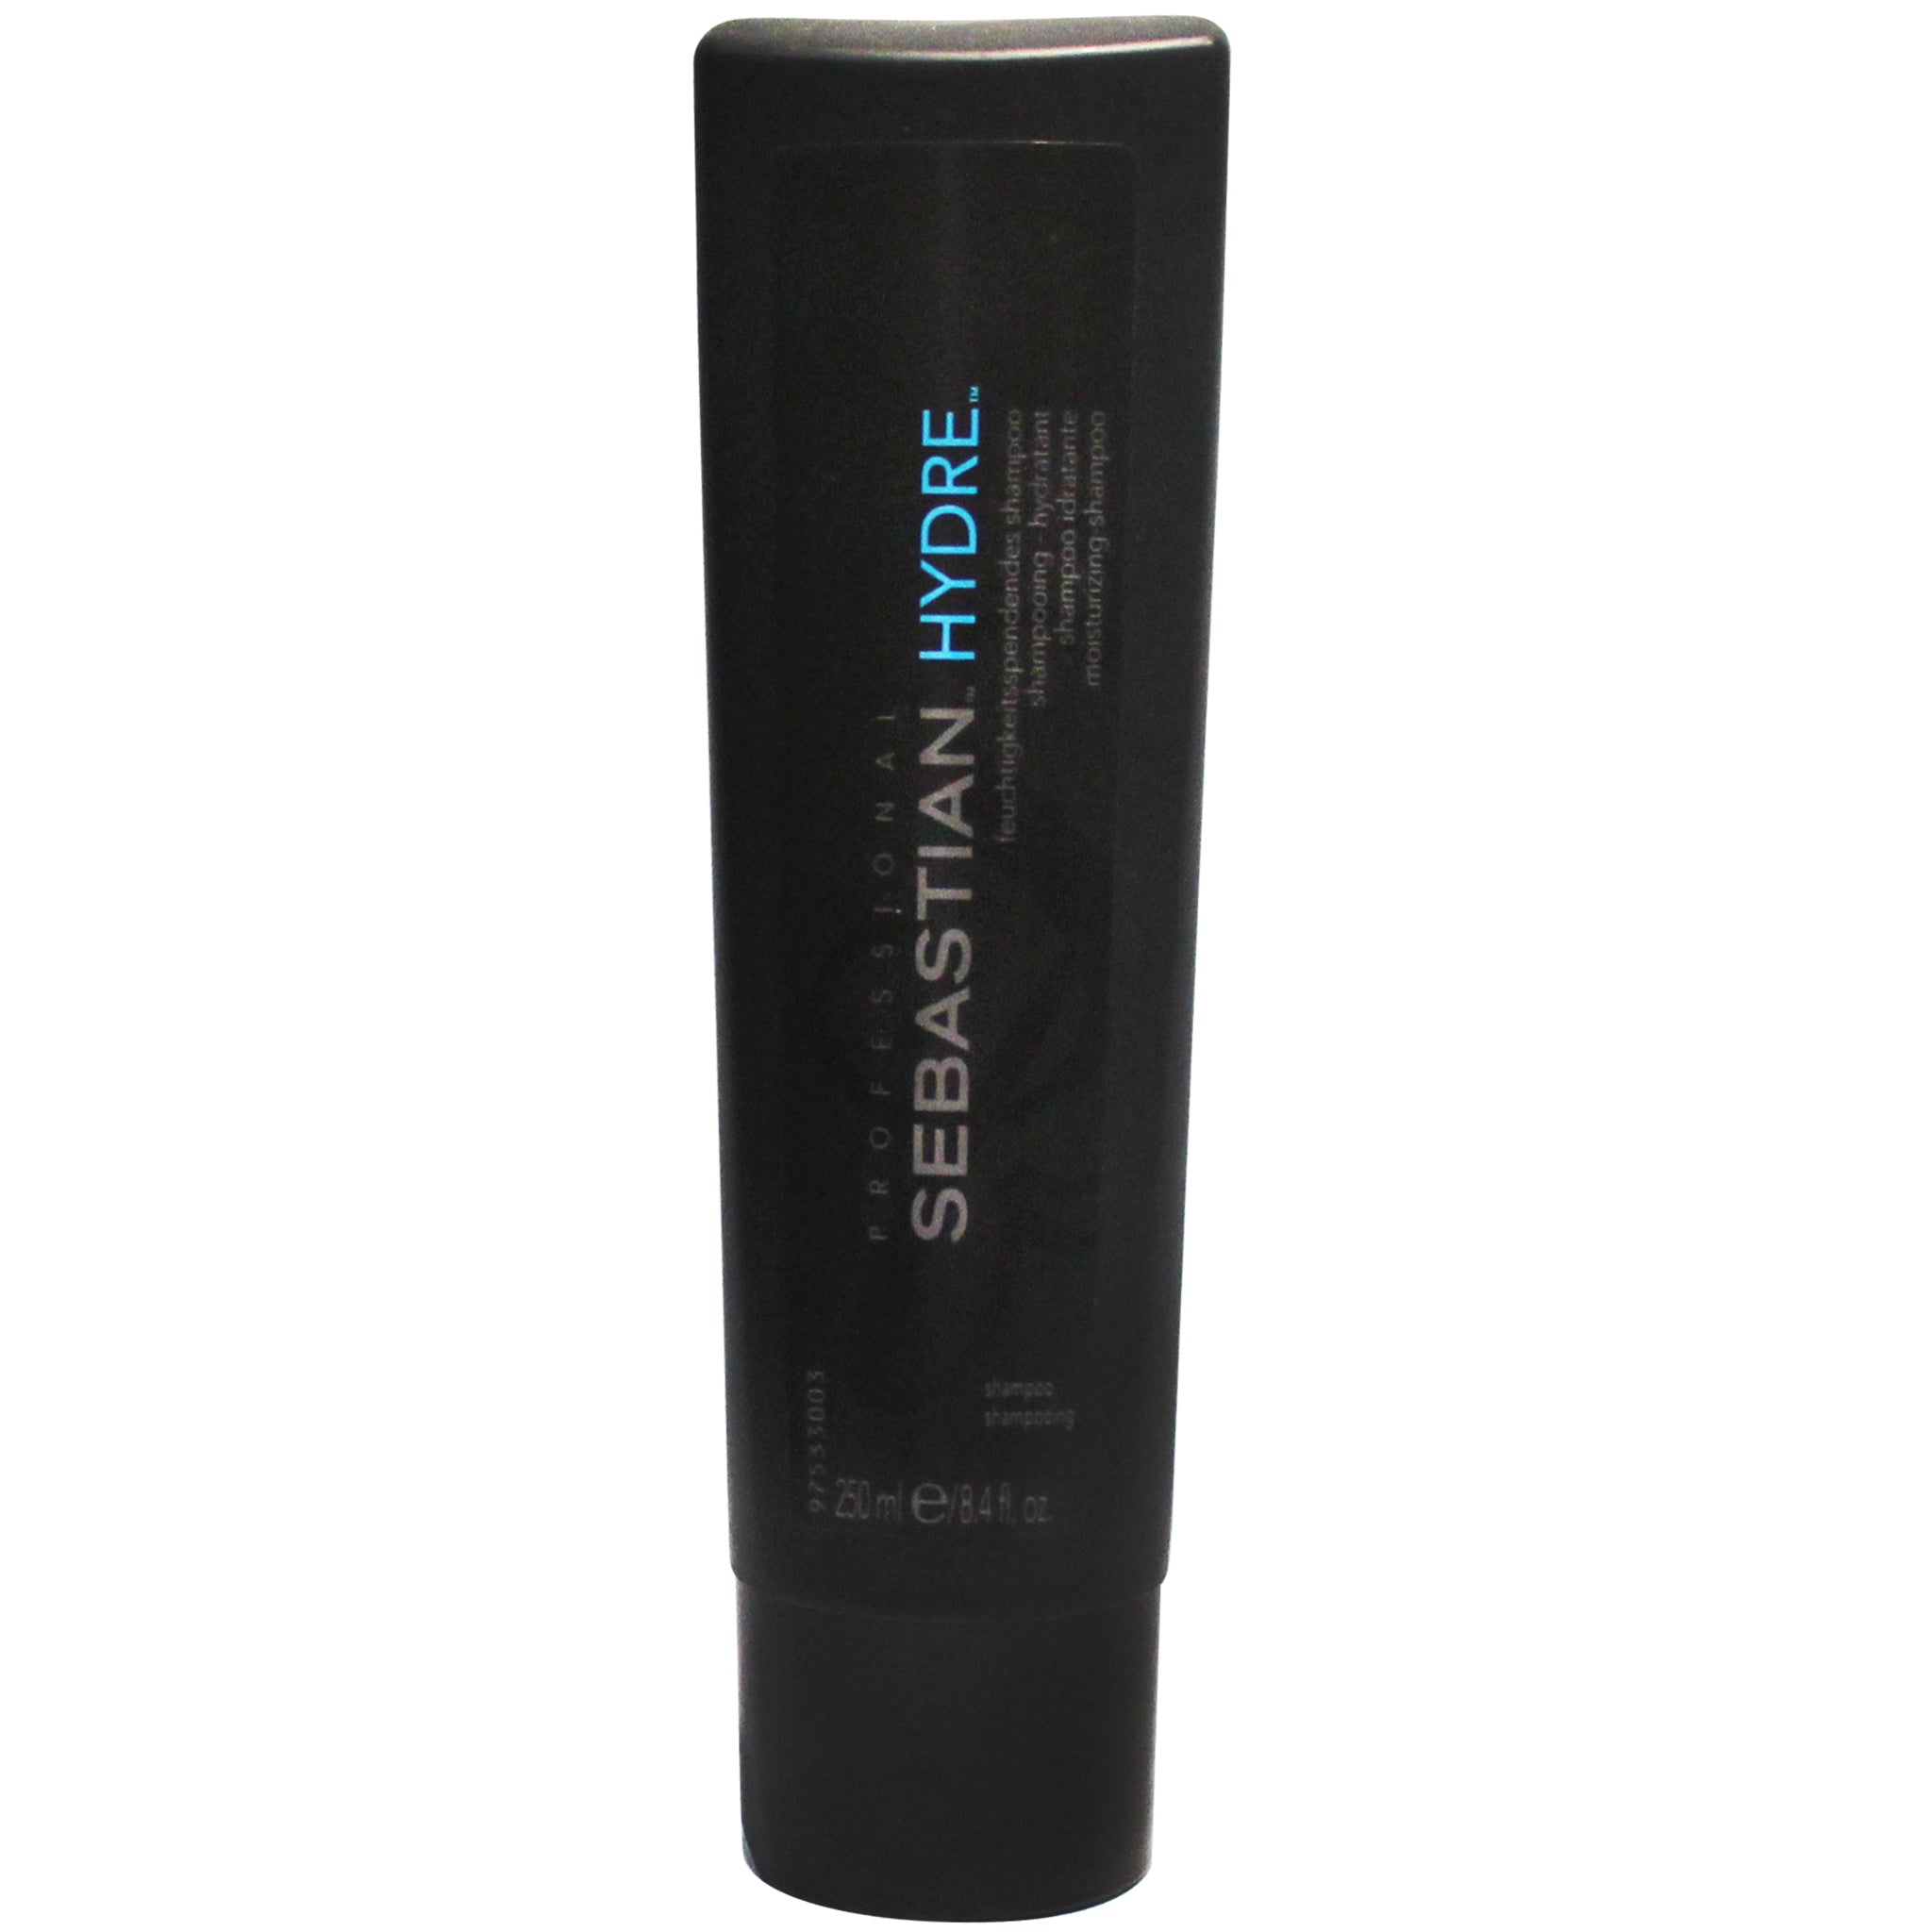 Hydre Shampoo 250 ml - Shampoo para cabello seco y encrespado limpia a profundidad e hidrata